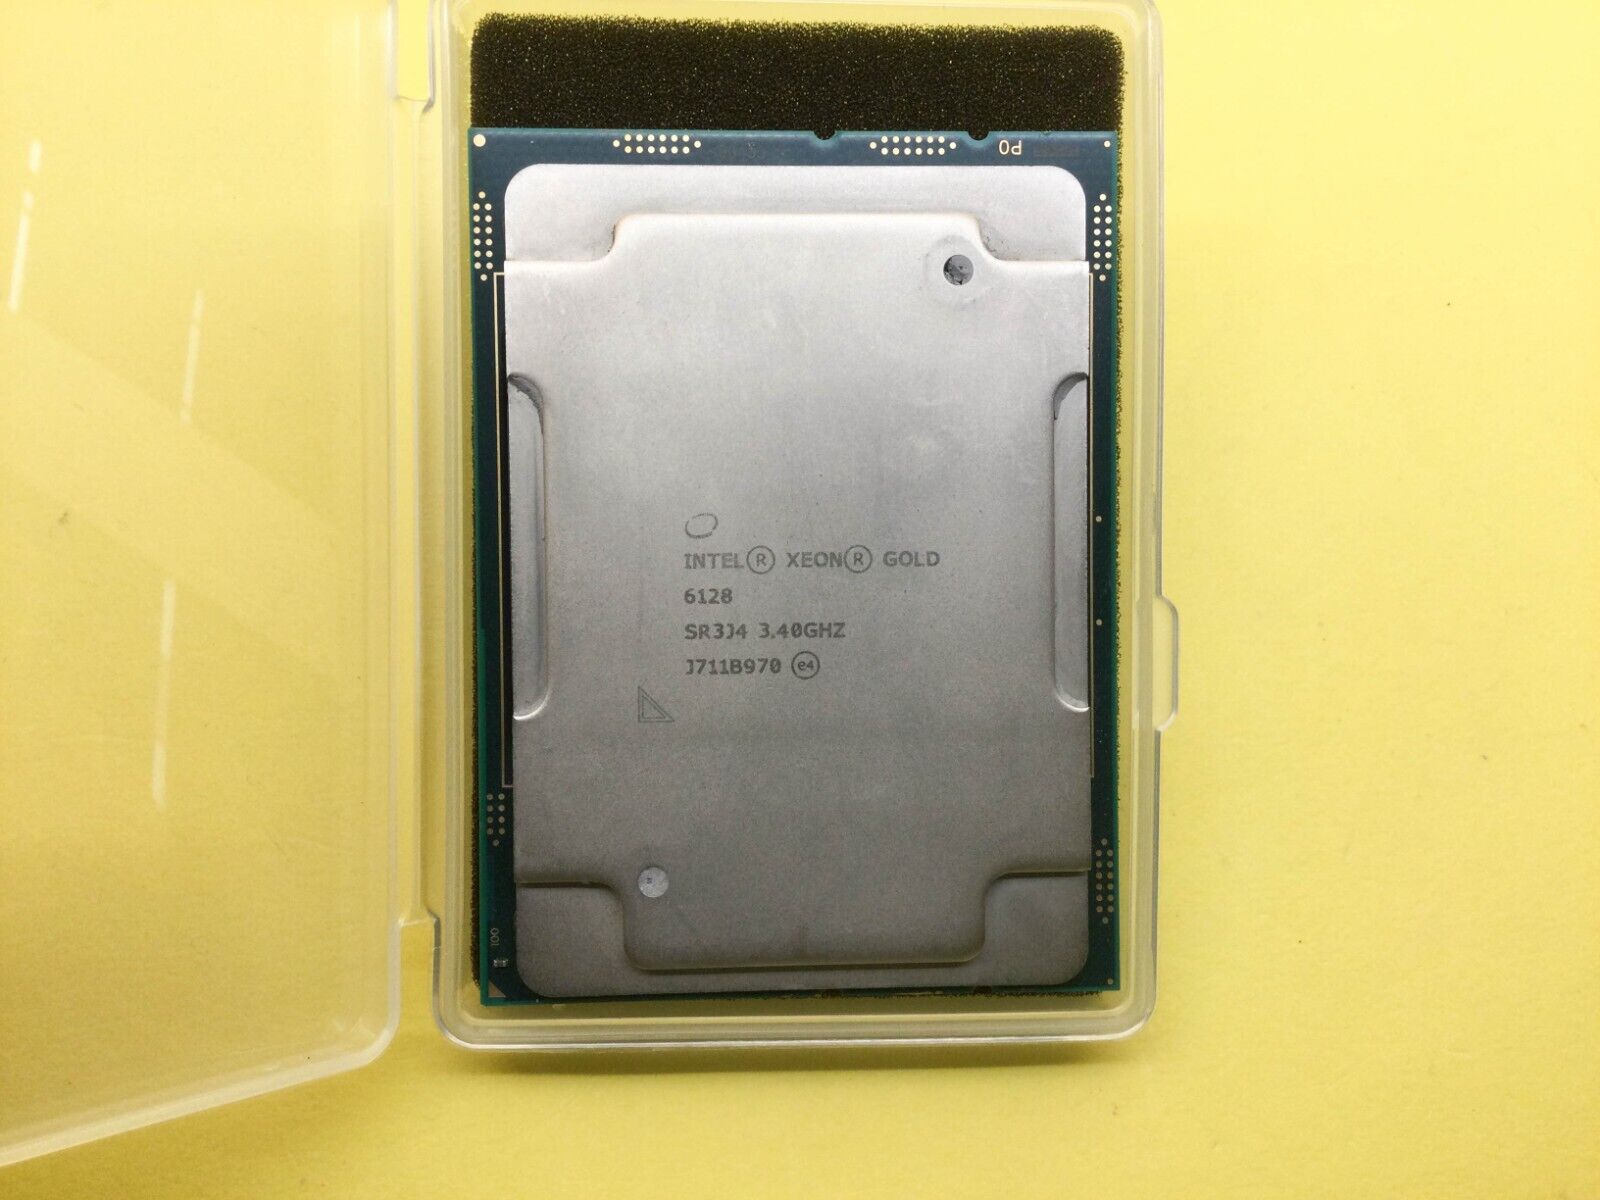 SR3J4 INTEL XEON PROCESSOR GOLD 6128 6-CORE 3.40GHZ 19.25MB 115W CPU